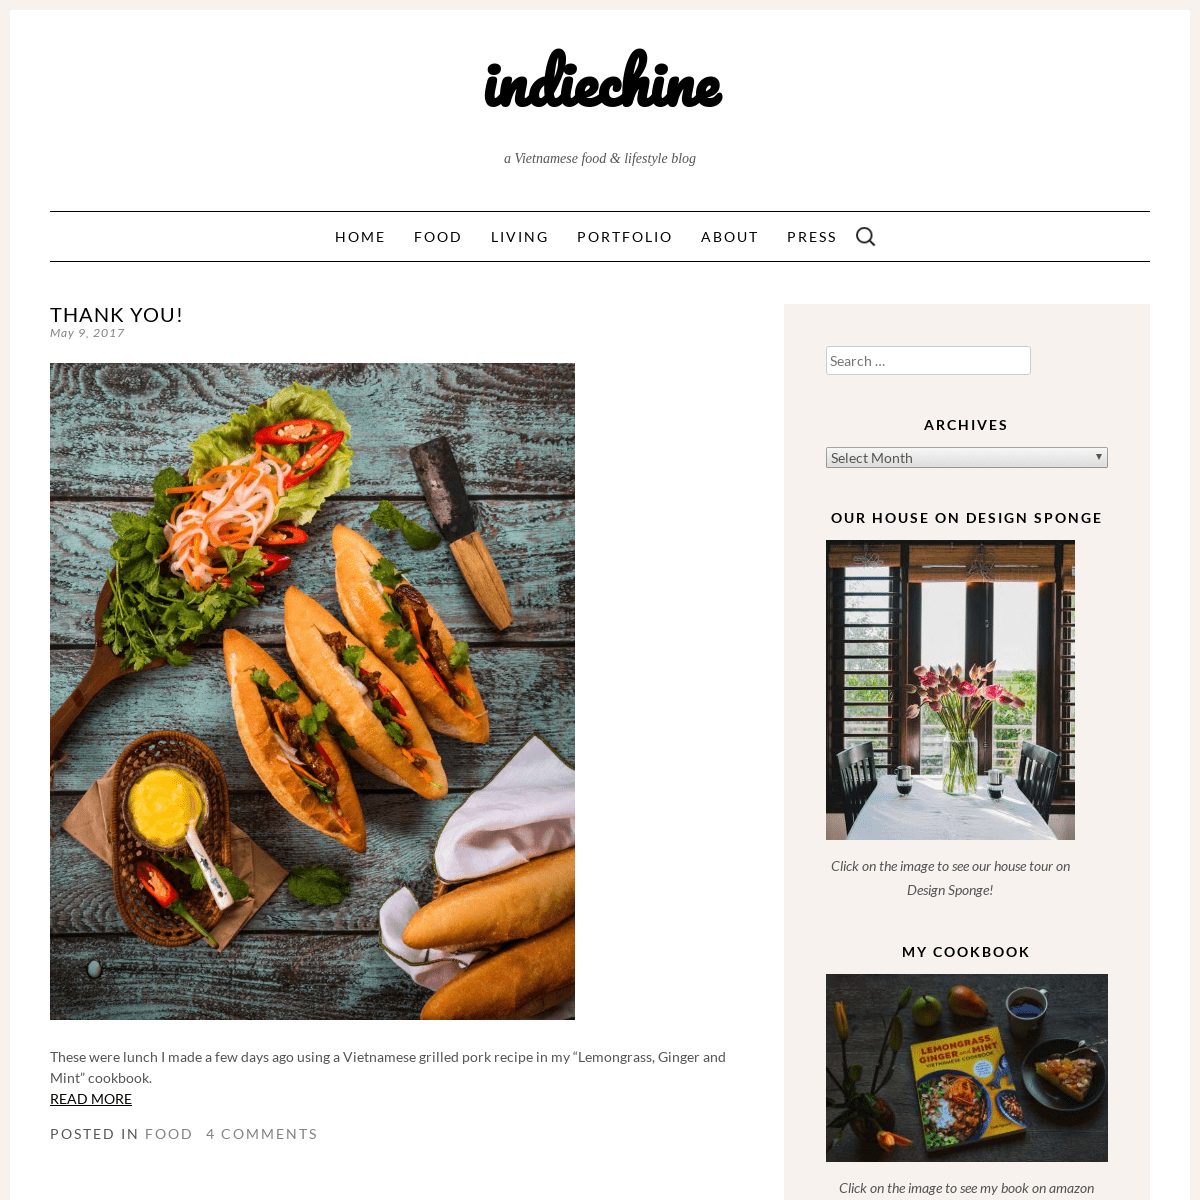 indiechine – a Vietnamese food & lifestyle blog